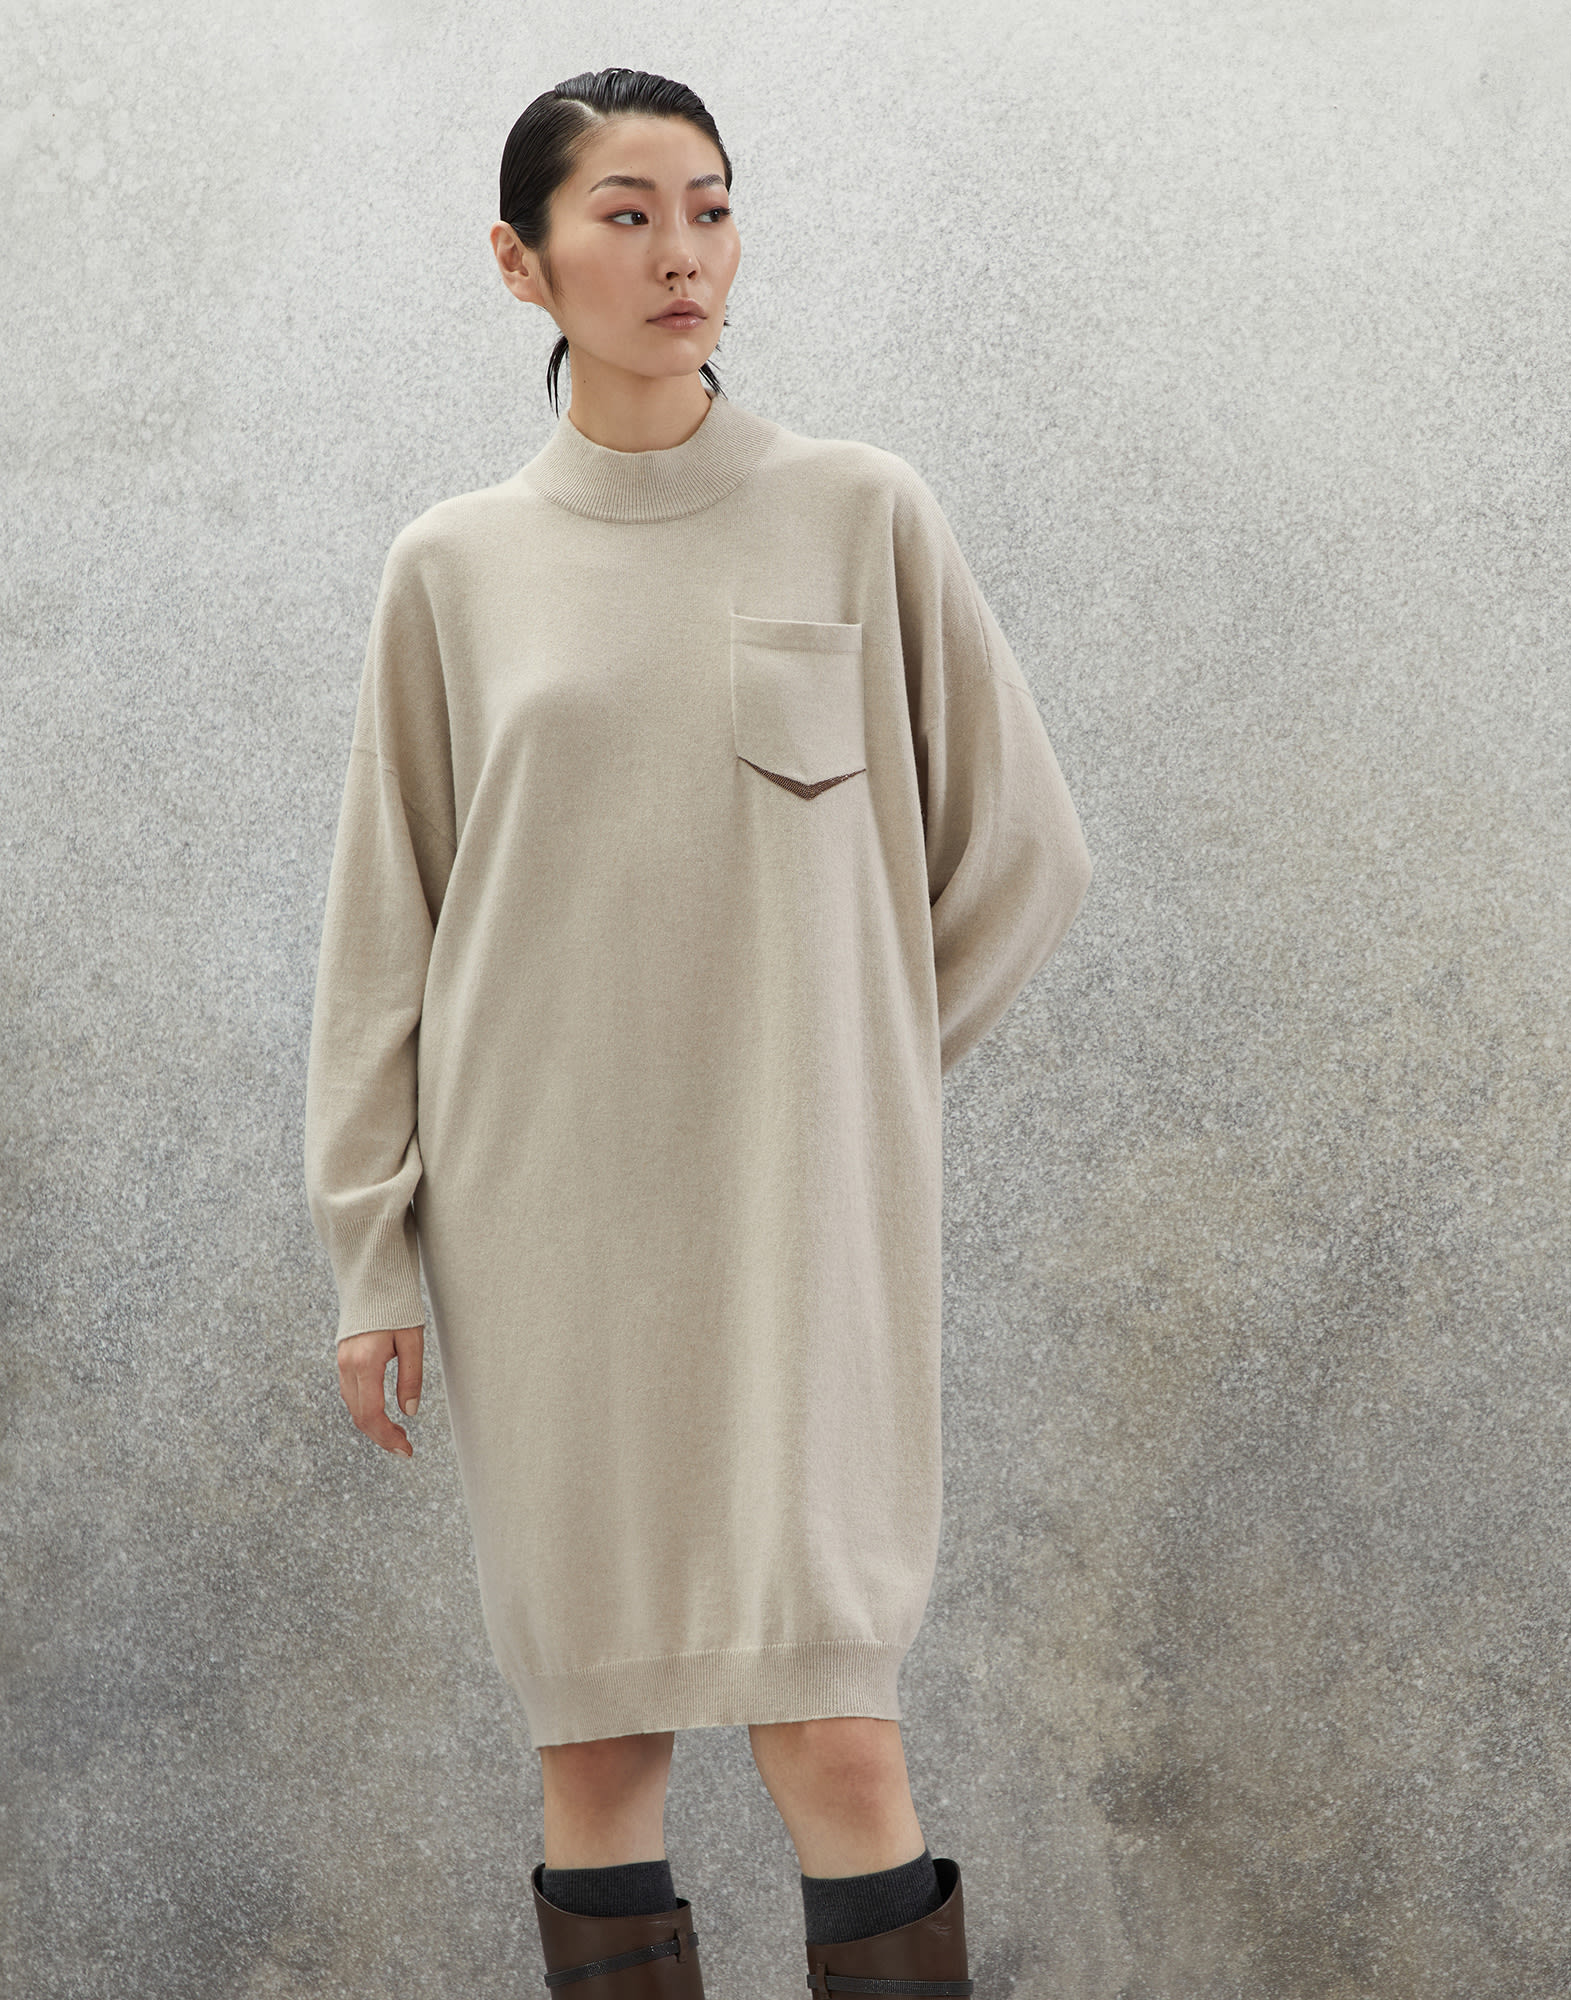 Cashmere knit dress Cool Beige Woman -
                        Brunello Cucinelli
                    